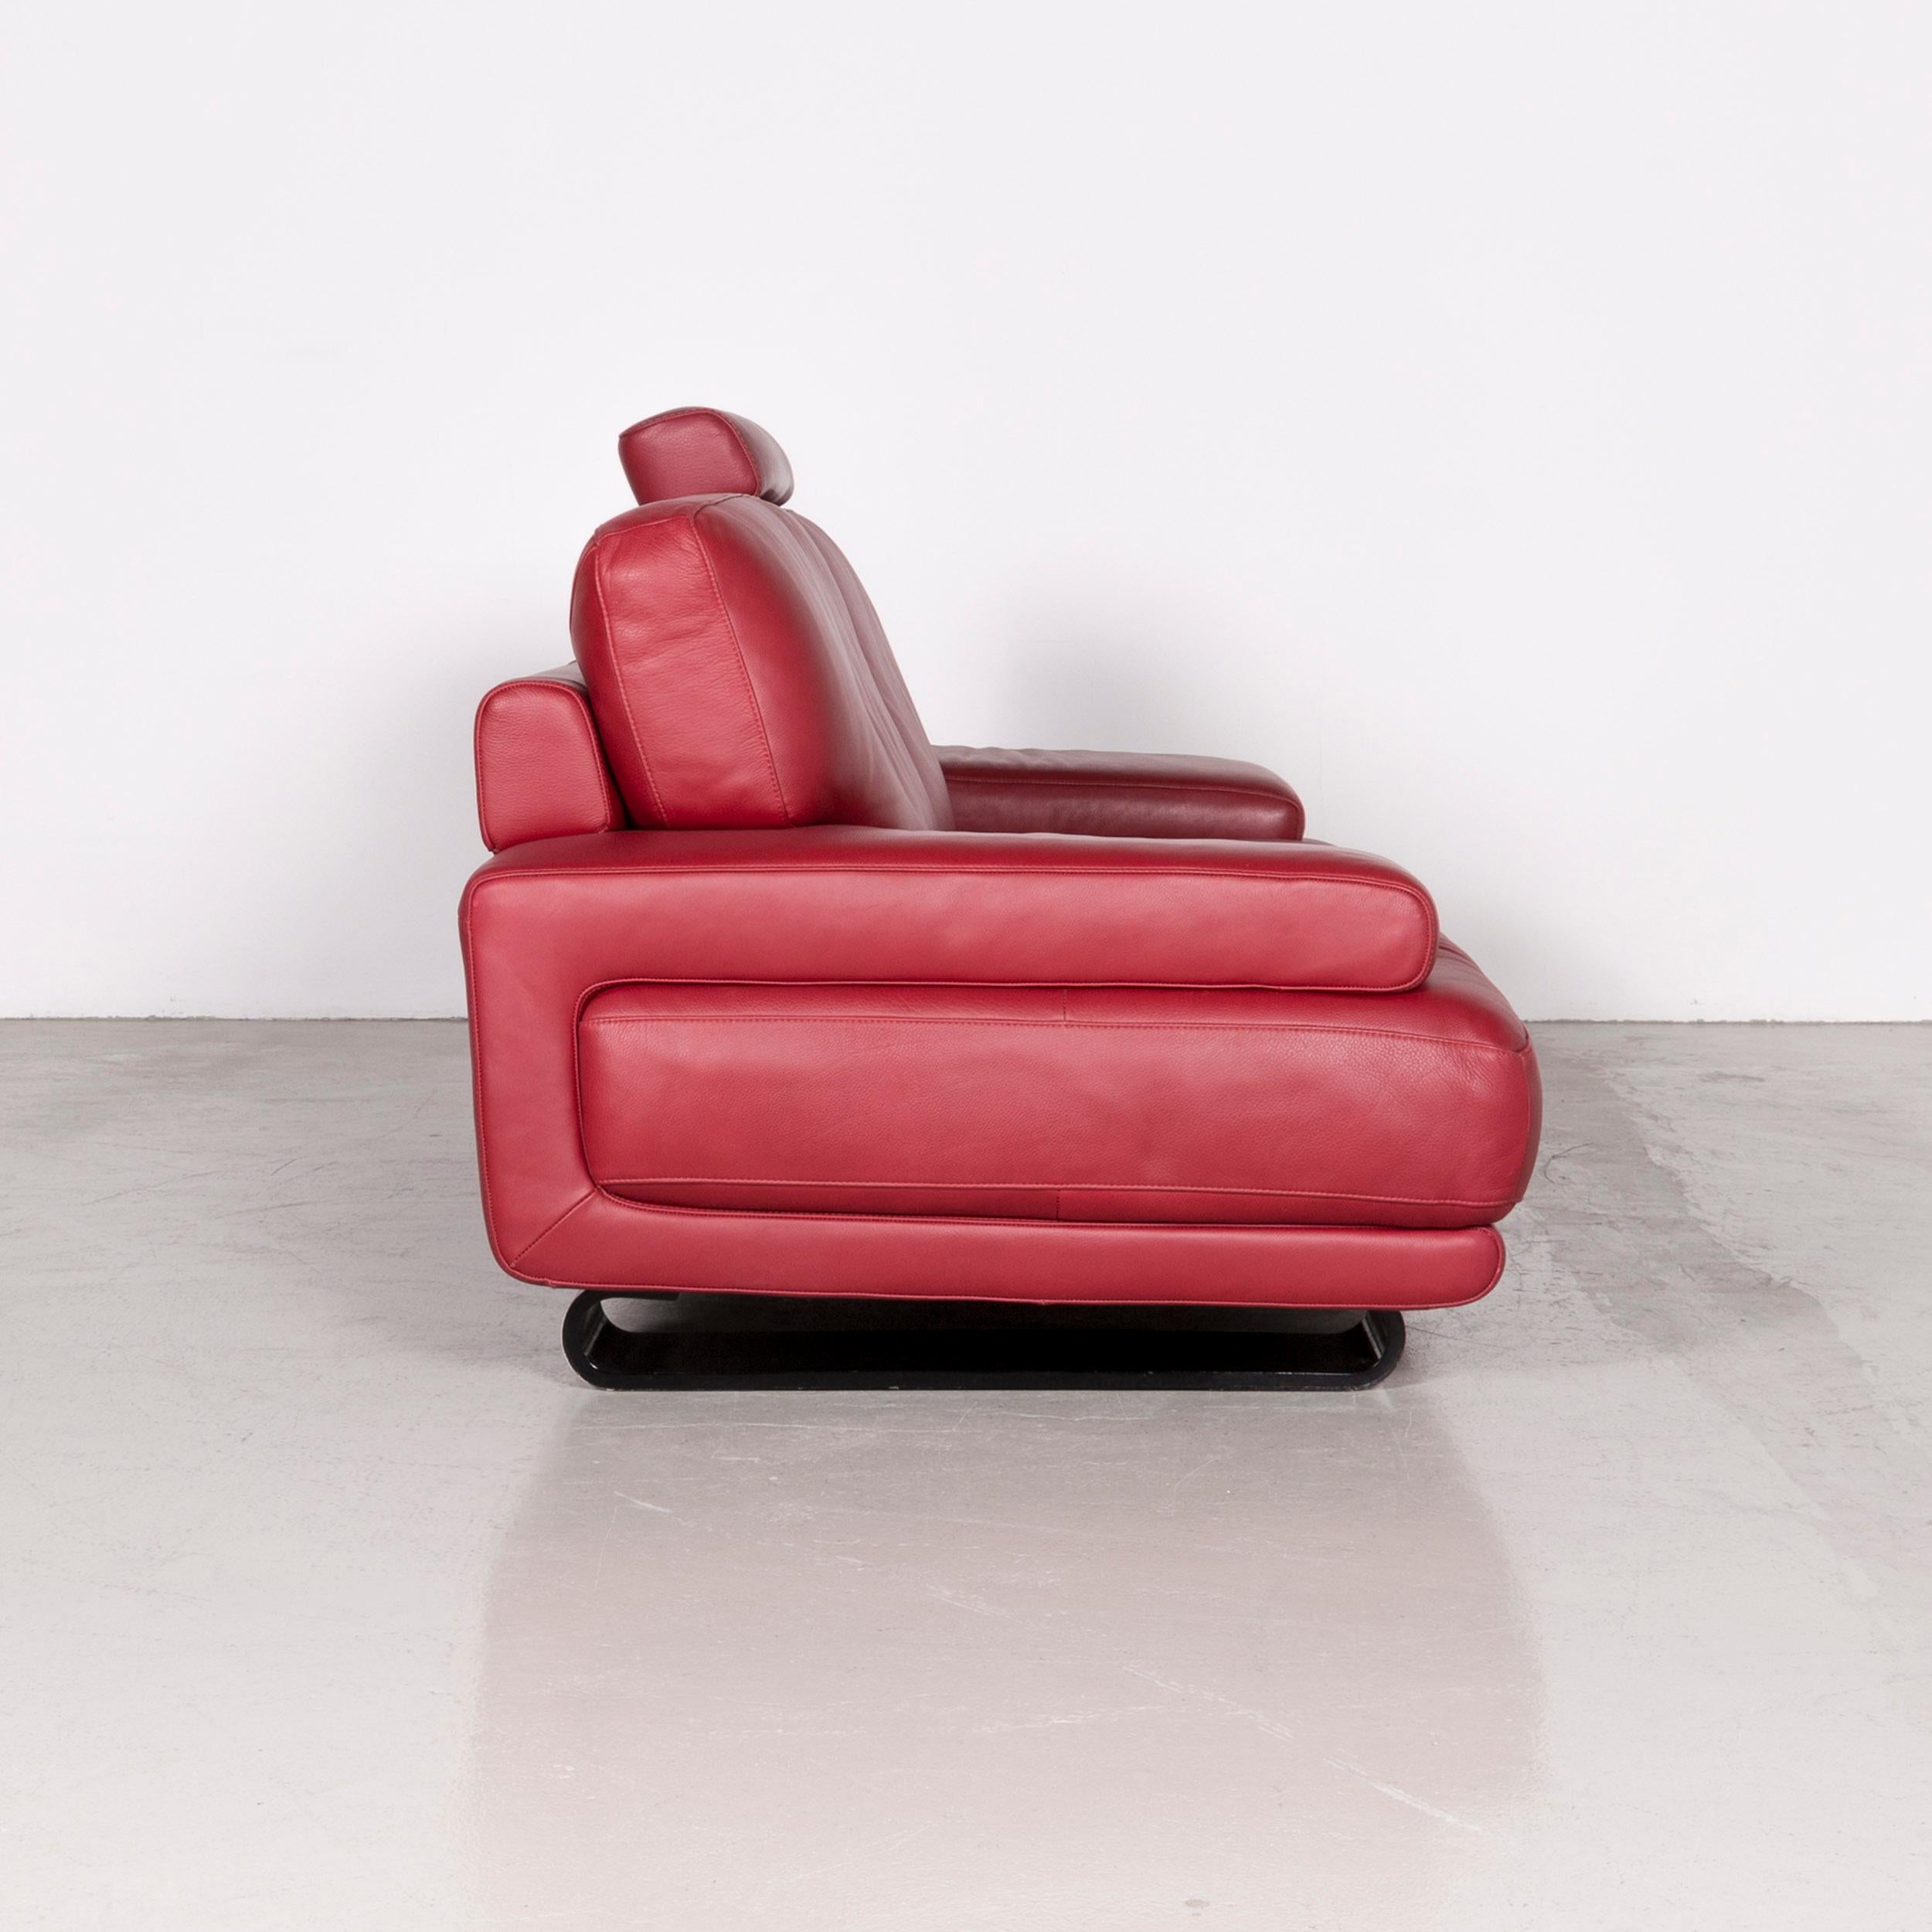 Contemporary Natuzzi Designer Leather Sofa red Three-Seat Couch